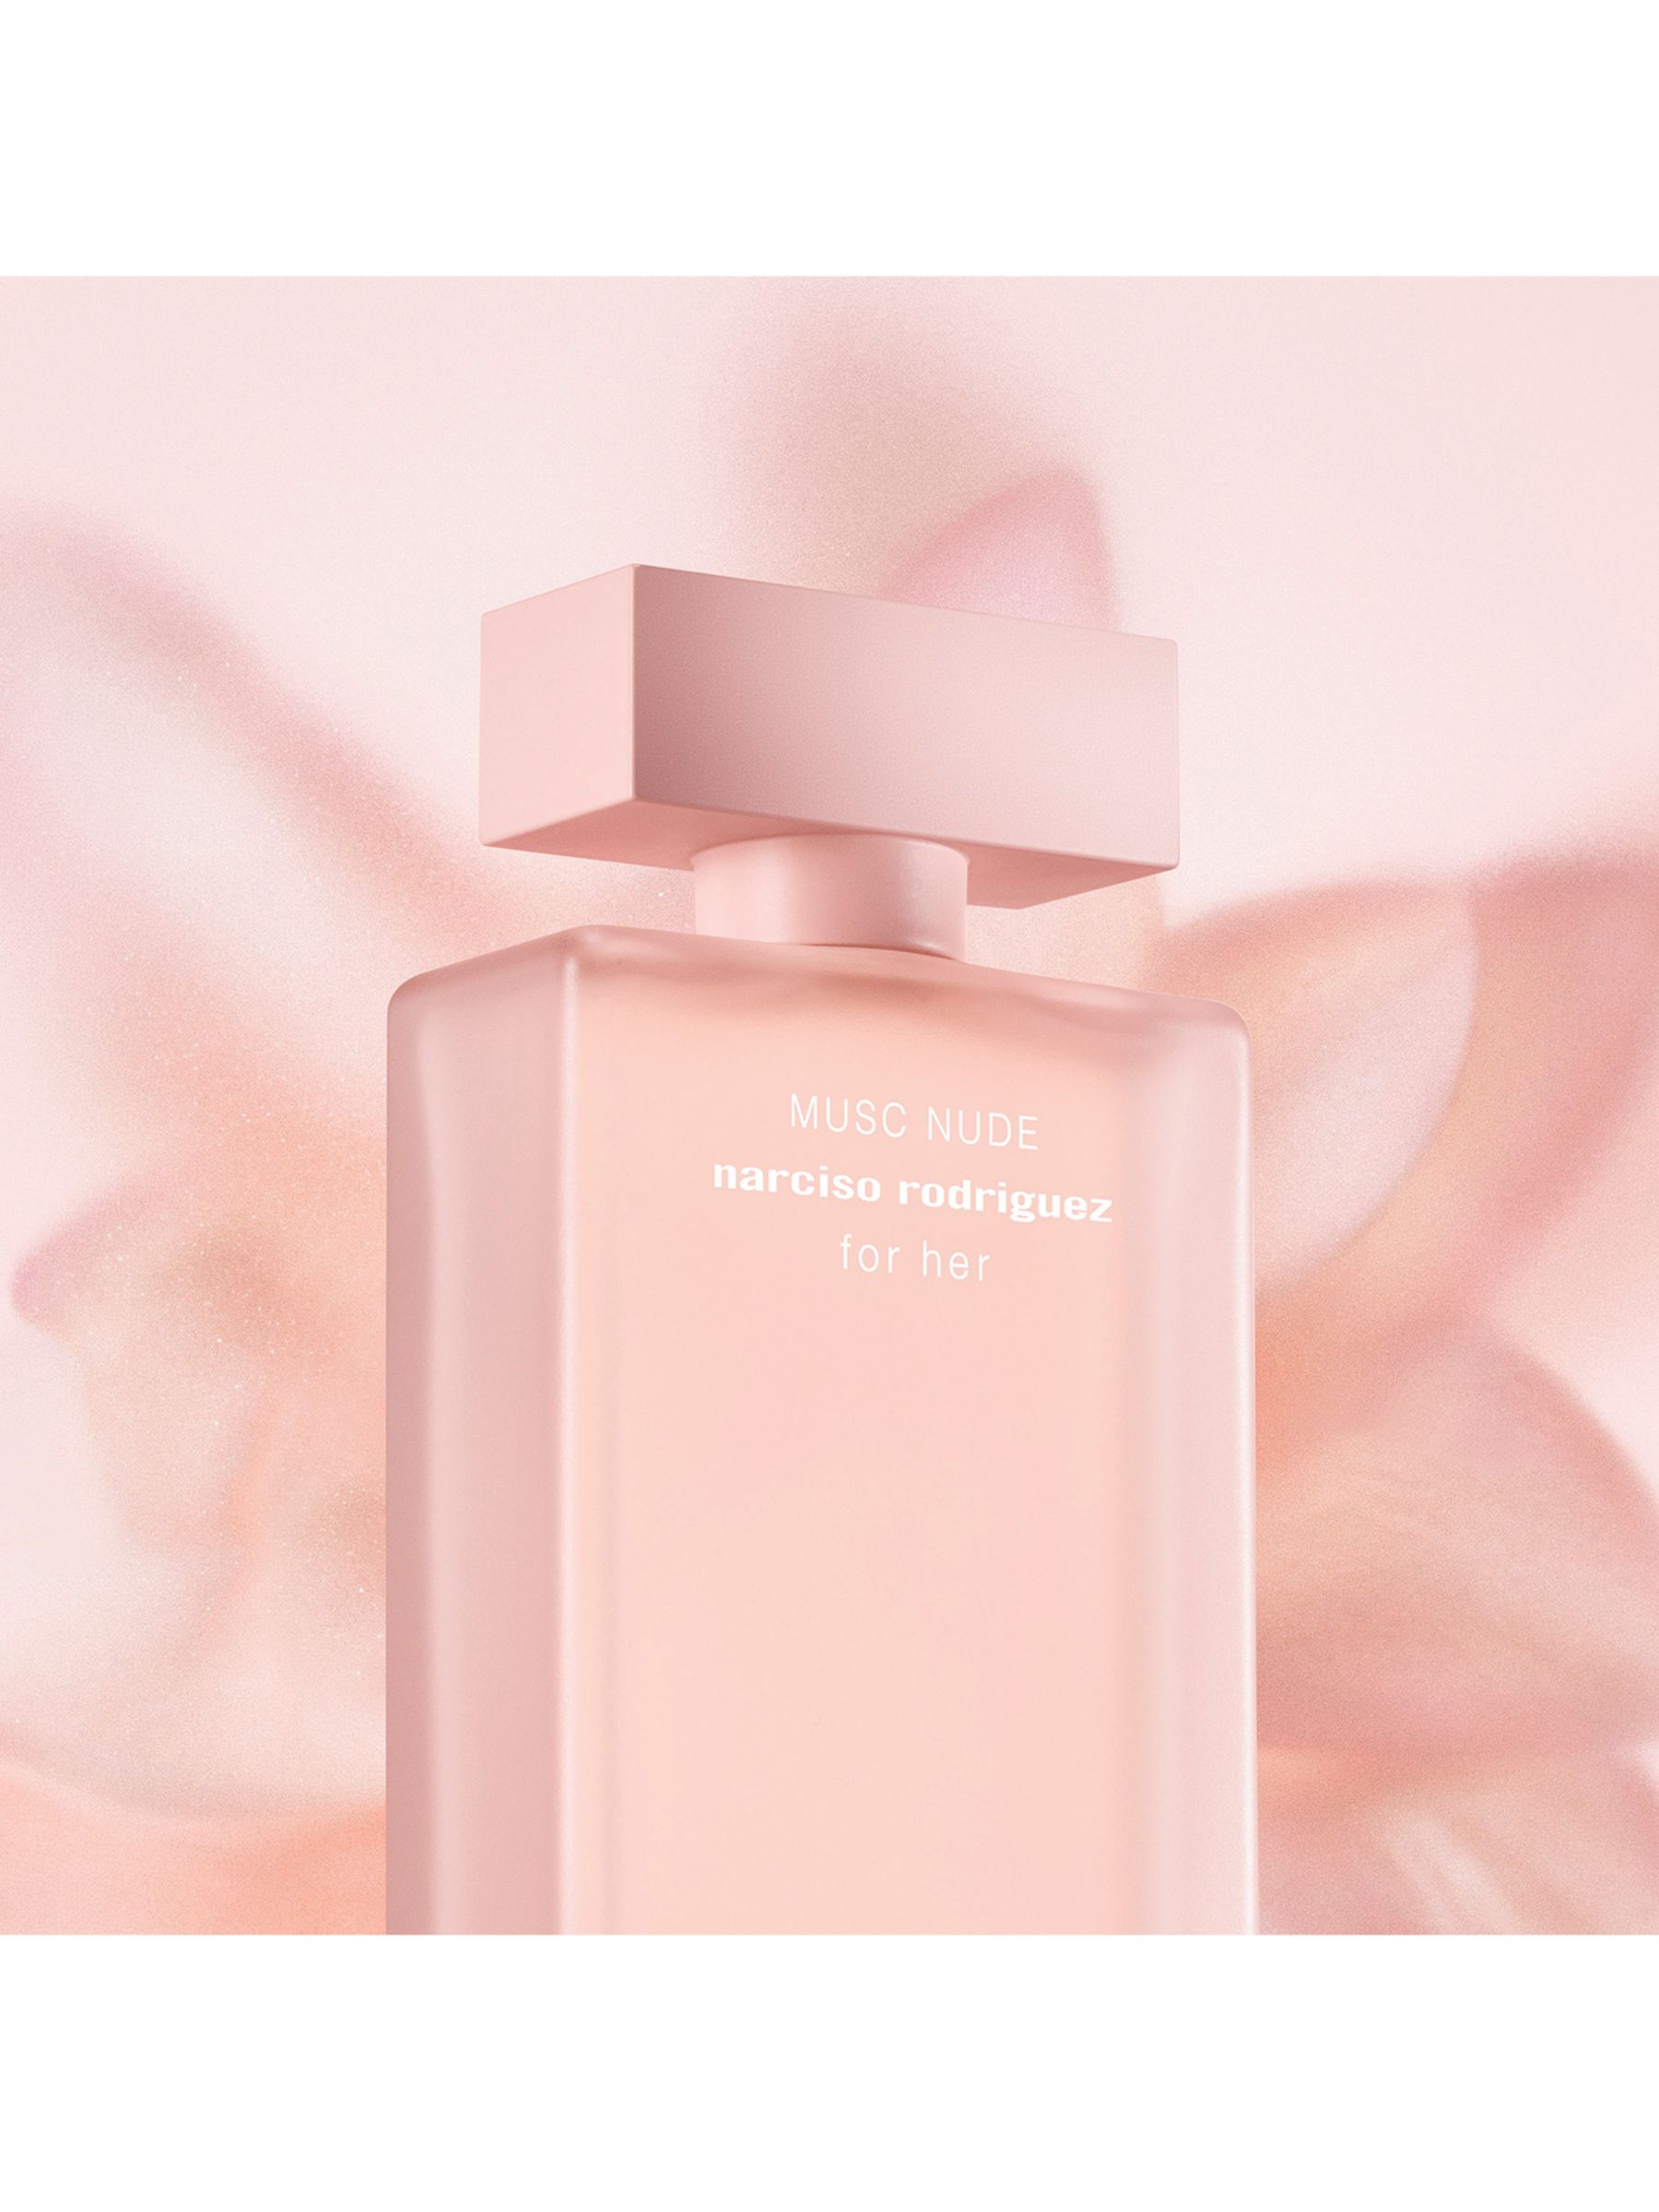 Narciso Rodriguez For Her Musc Nude Eau de Parfum, 30ml 3